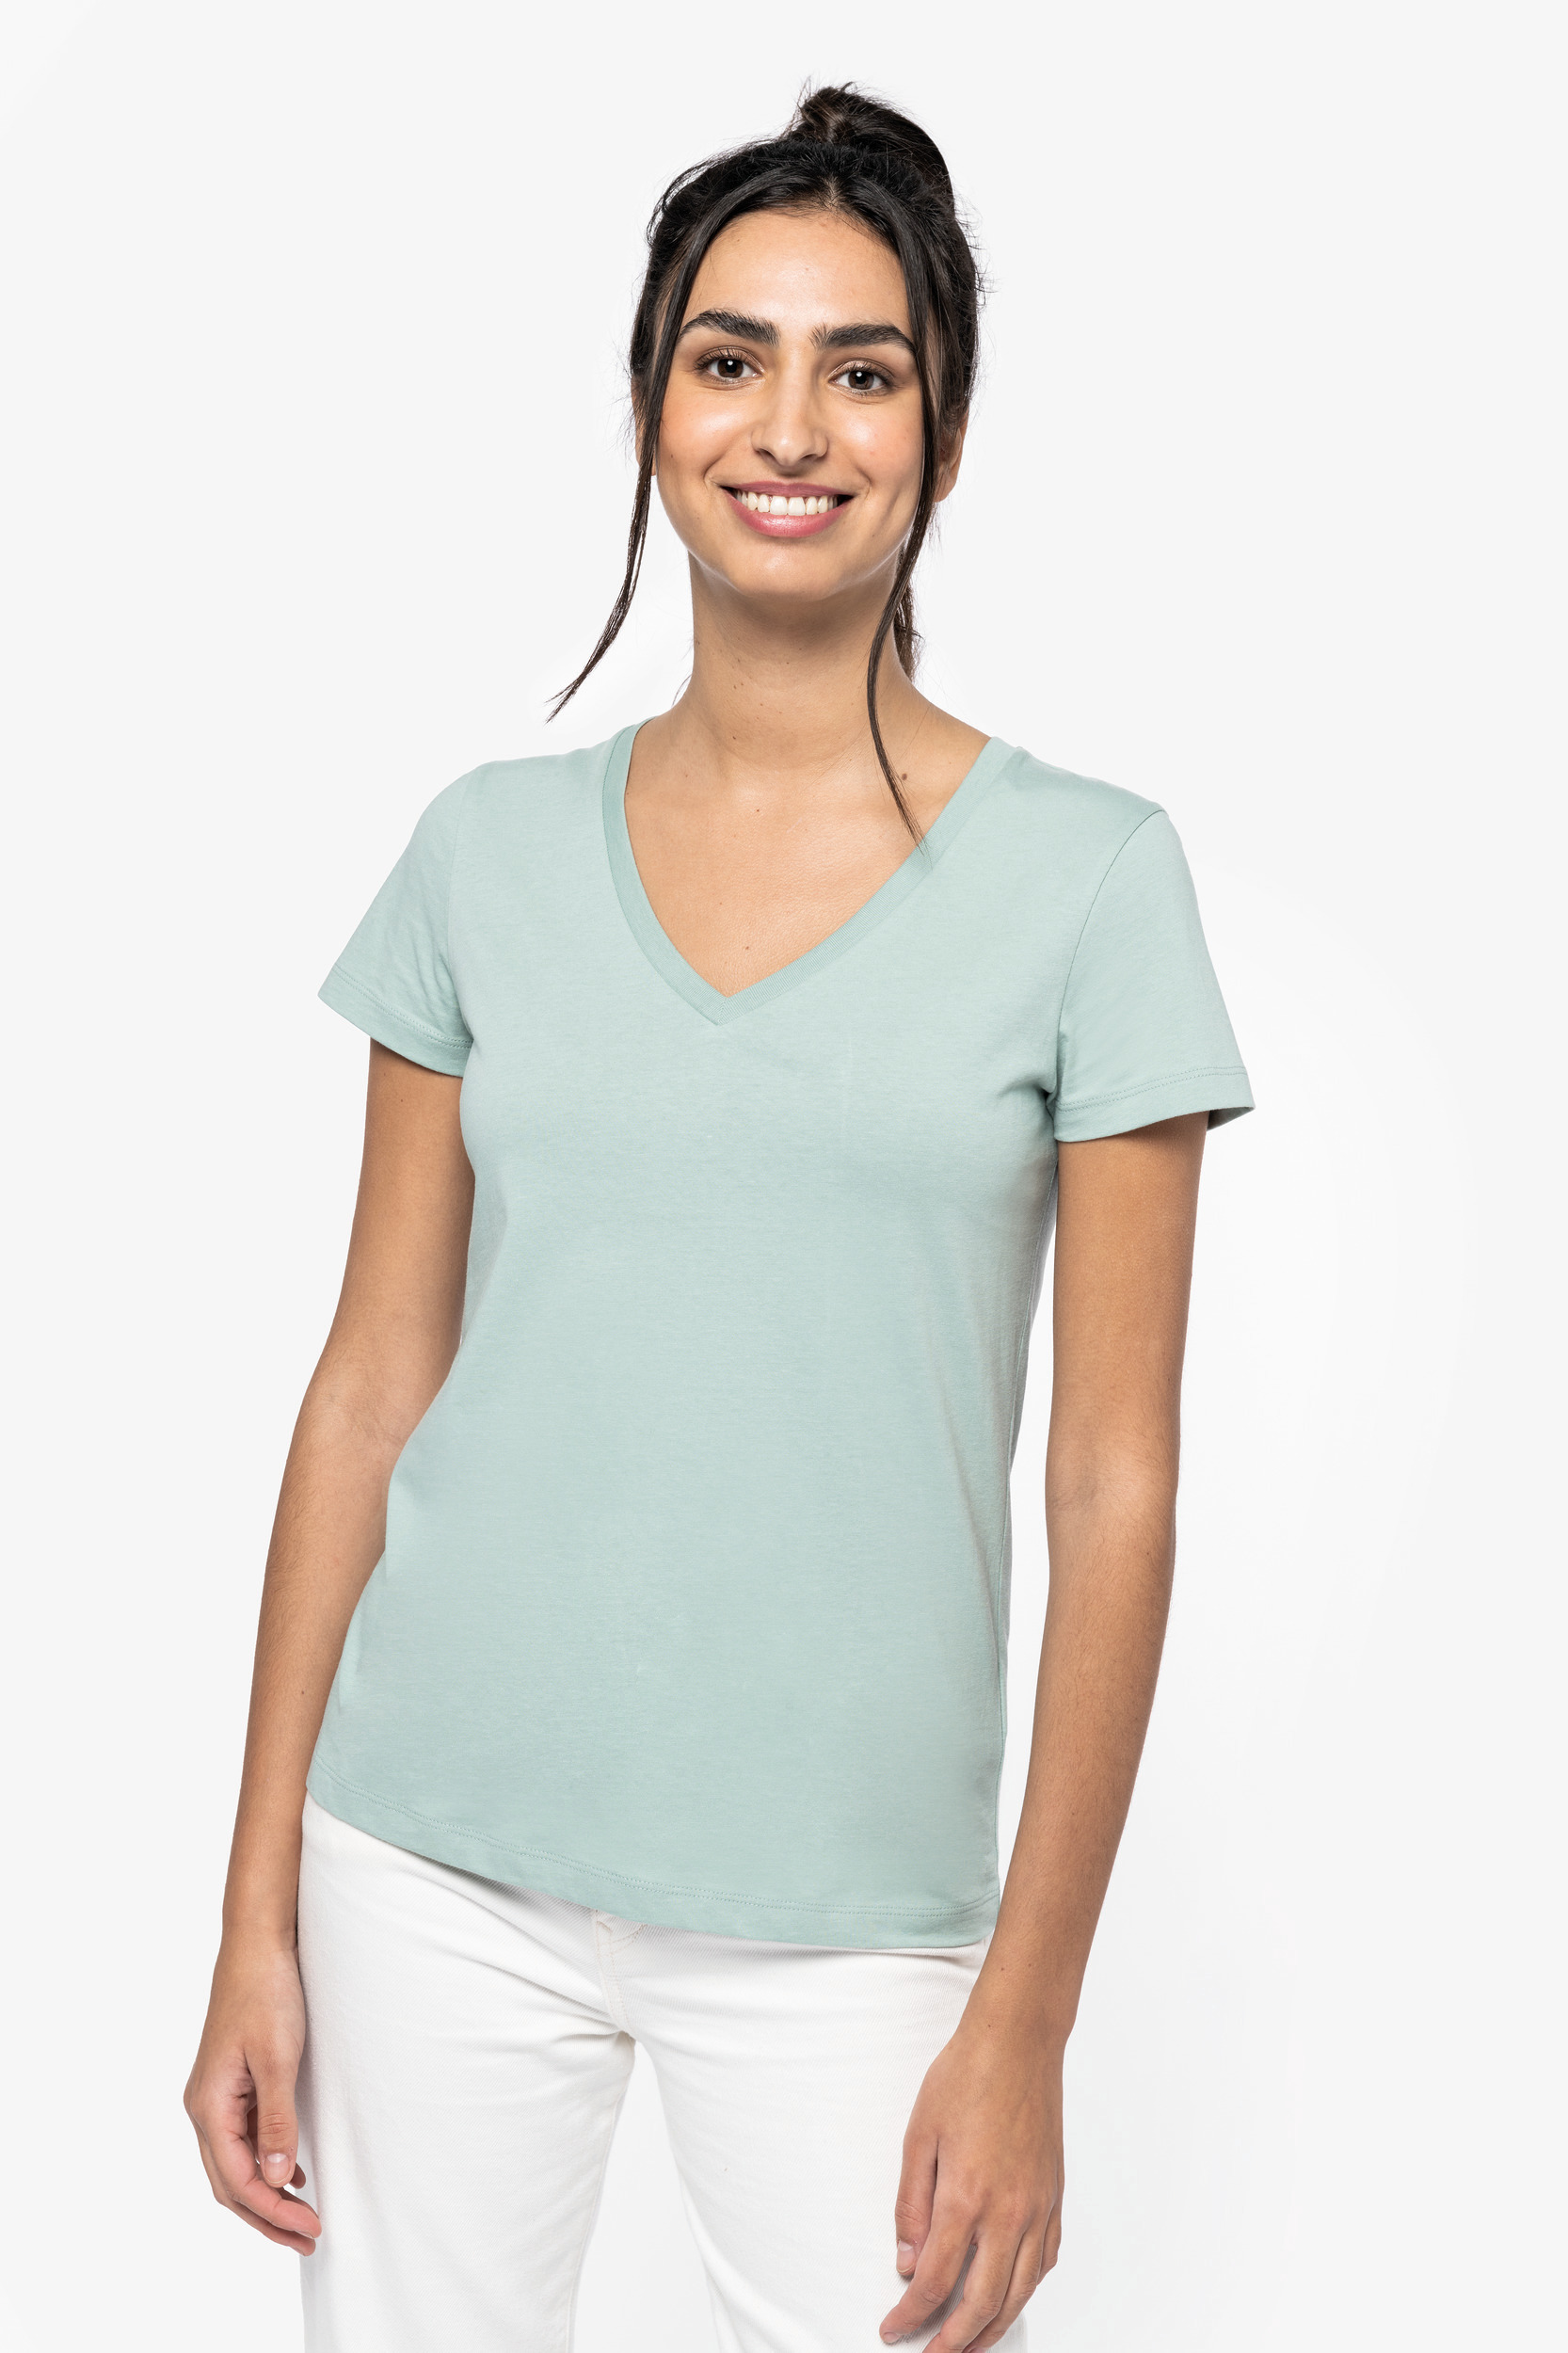 NS334 - Camiseta ecorresponsable cuello de pico mujer